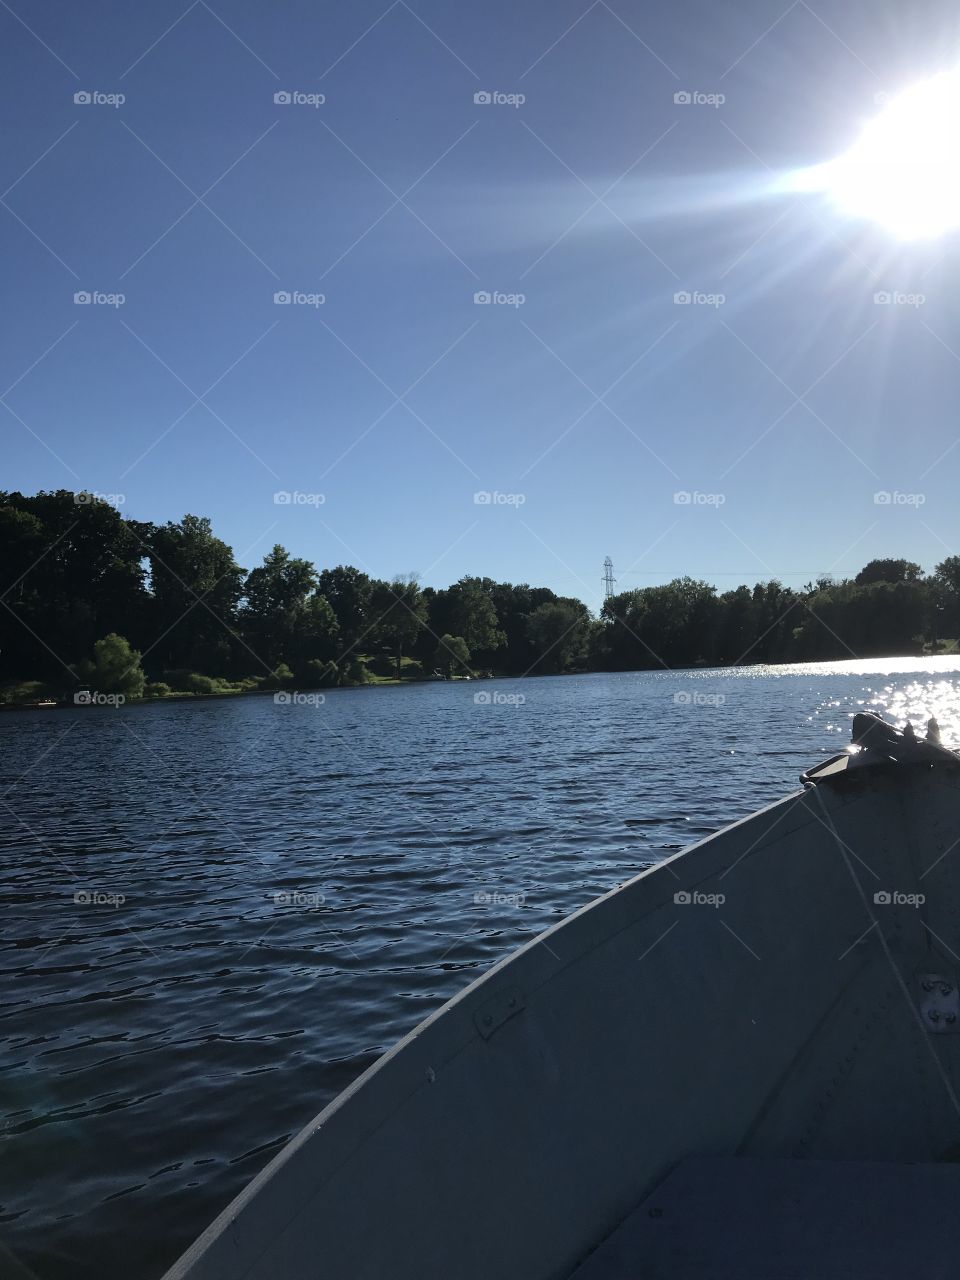 Fishing on the Lake, sun shining bright, such a beautiful view! 